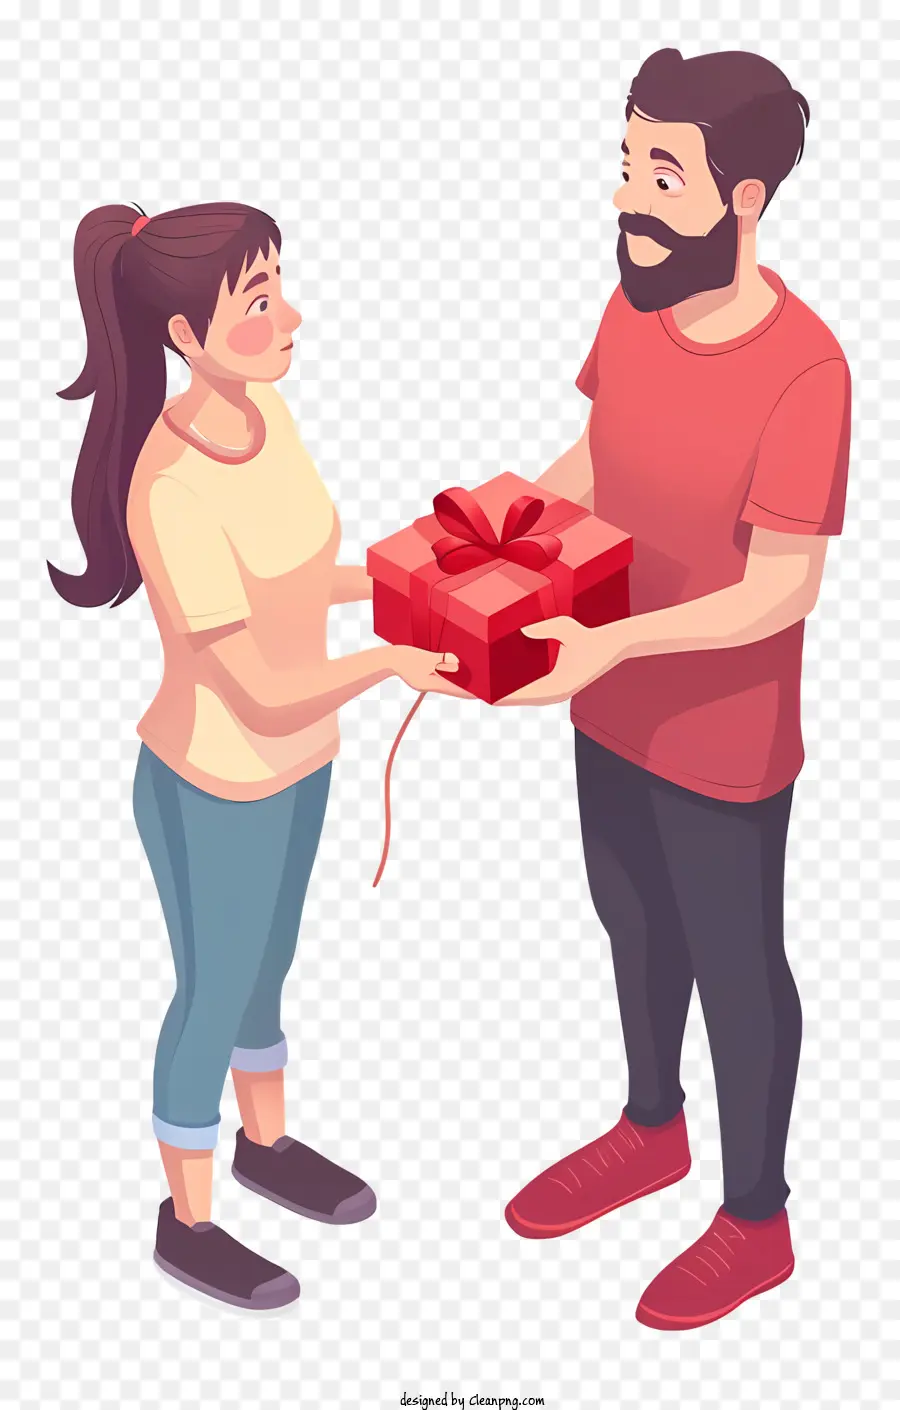 valentine gift for boyfriend relevant keywords: gift surprise giving red box